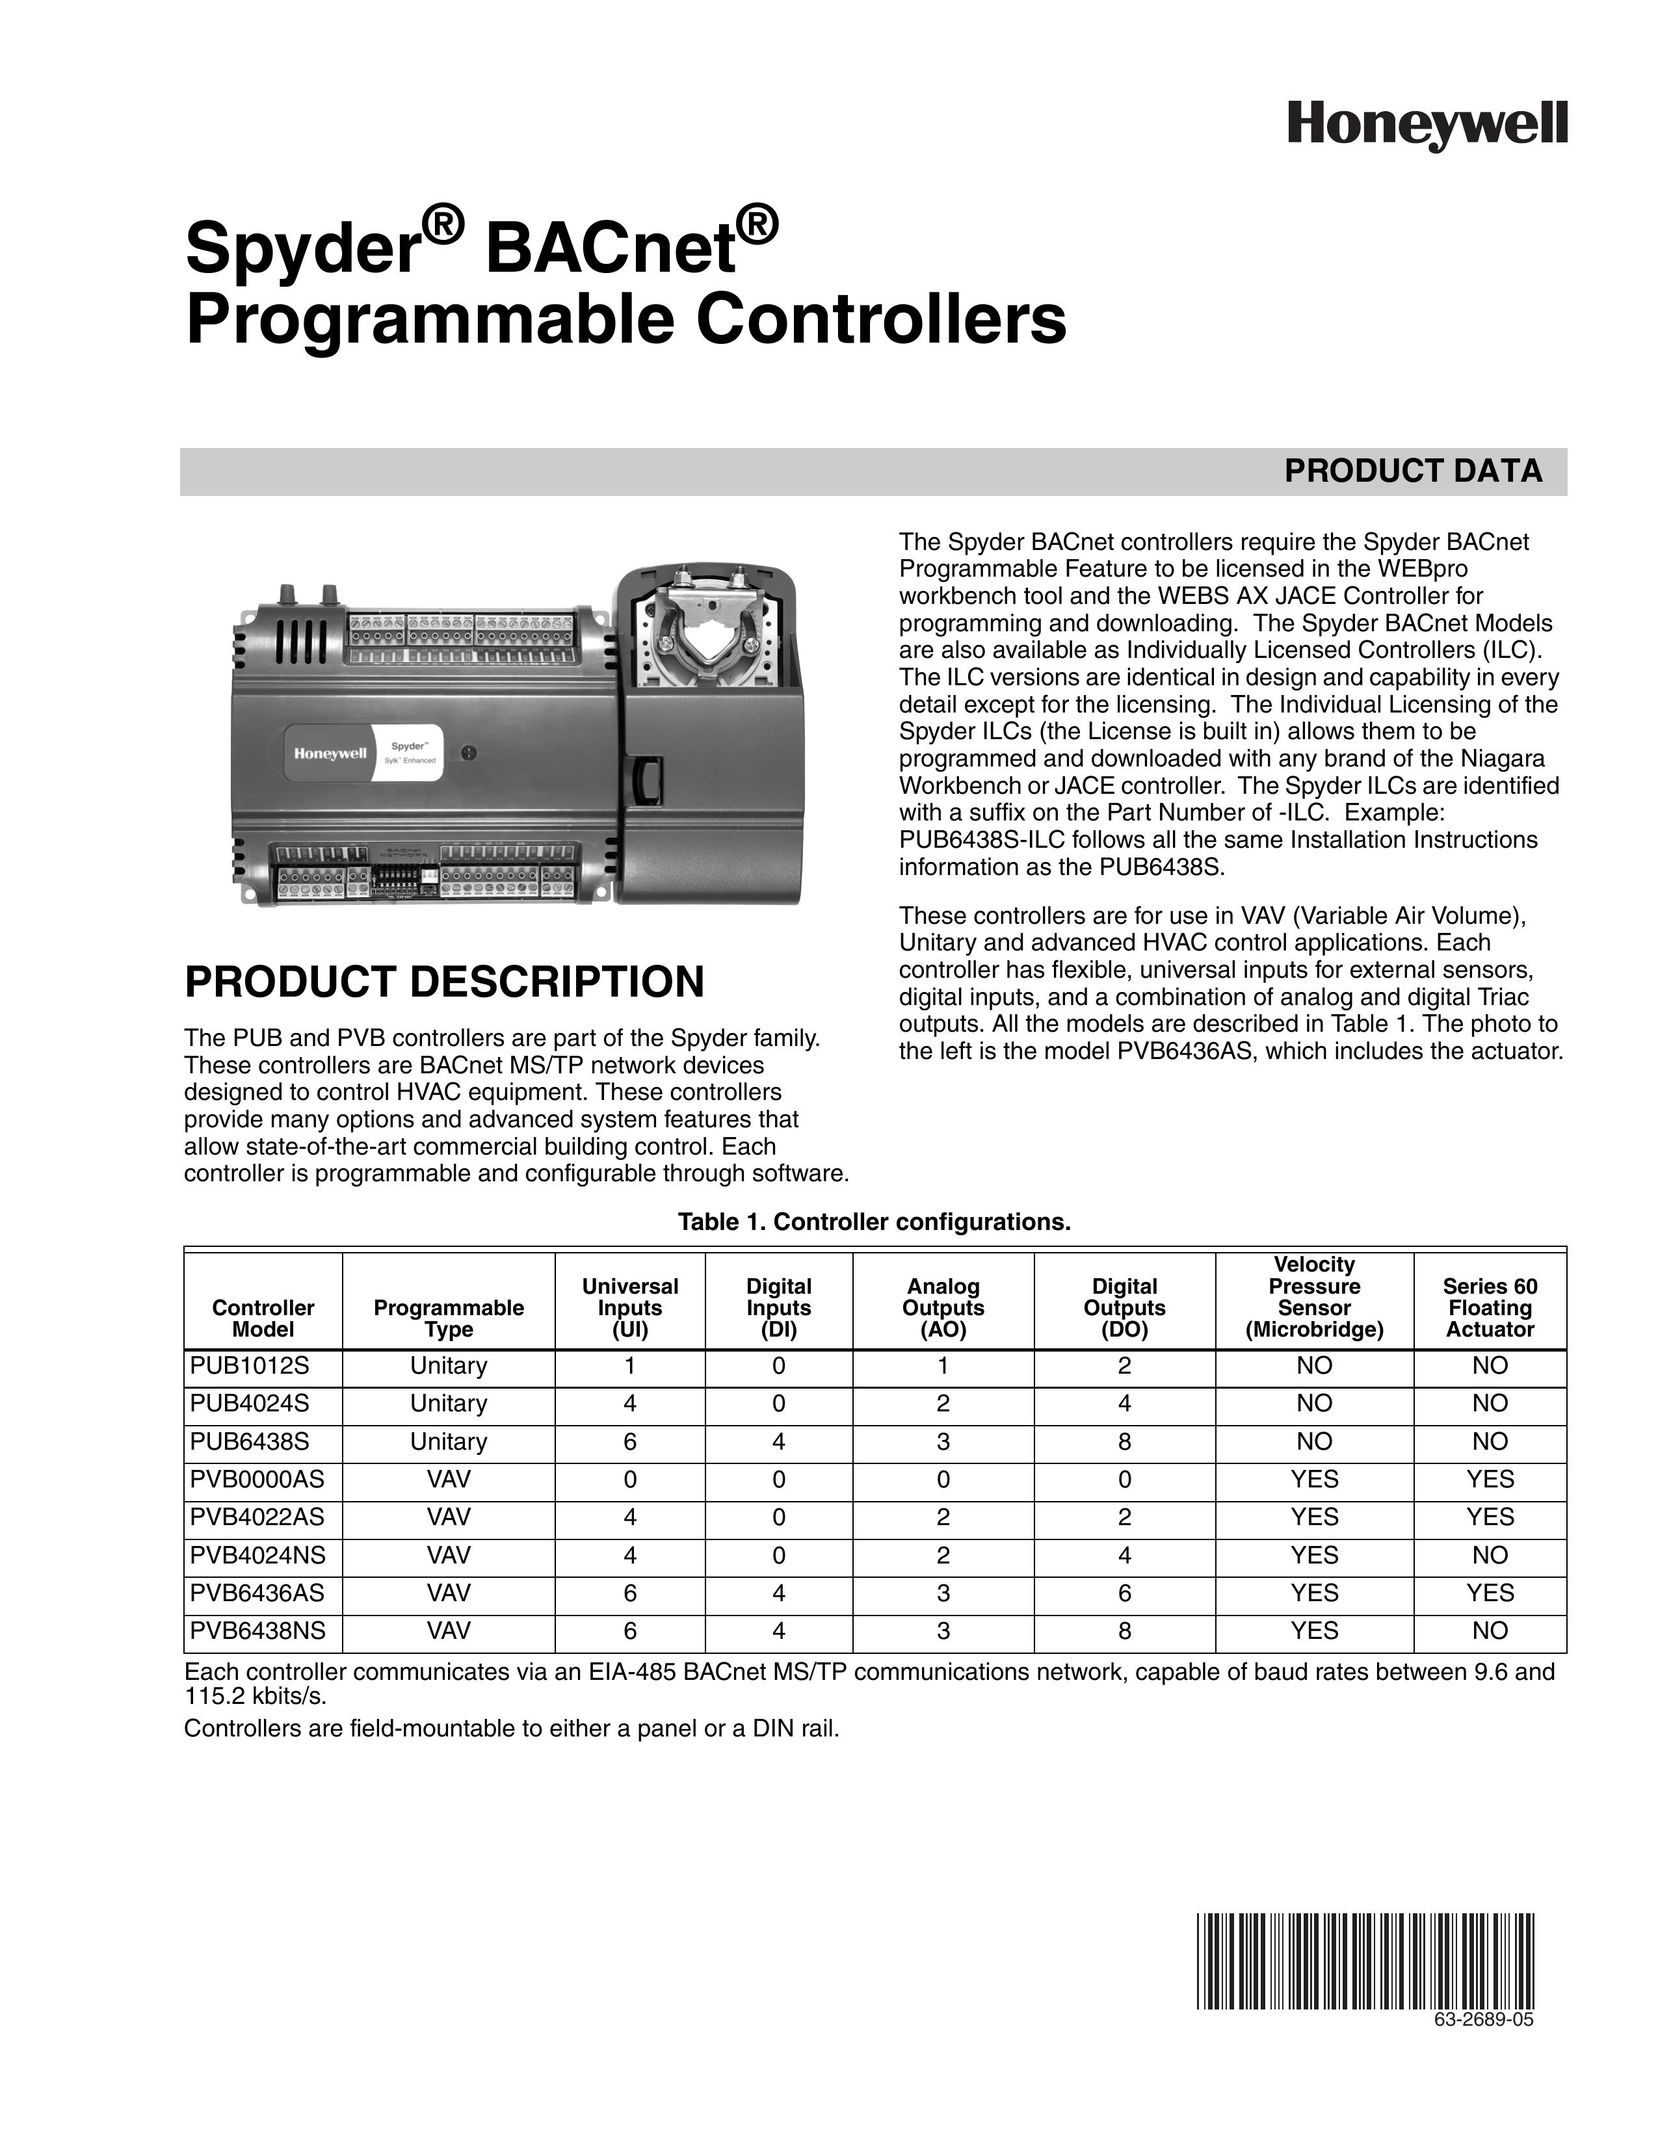 Honeywell PVB4024S Universal Remote User Manual